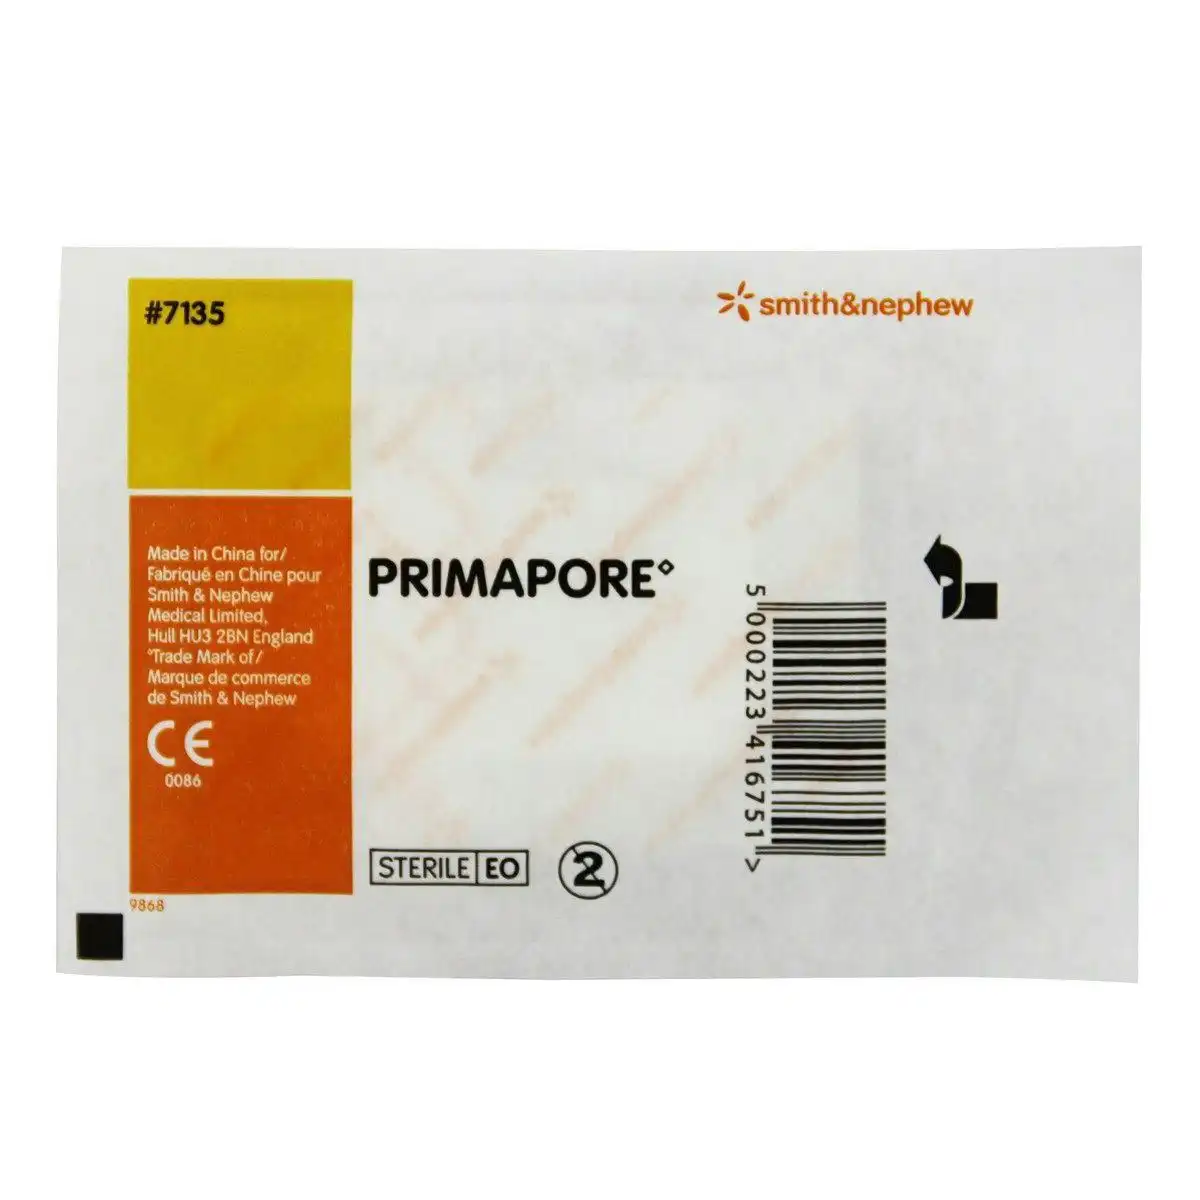 Primapore Dressing 20cm x 10cm - Single Dressing (1 Pack)